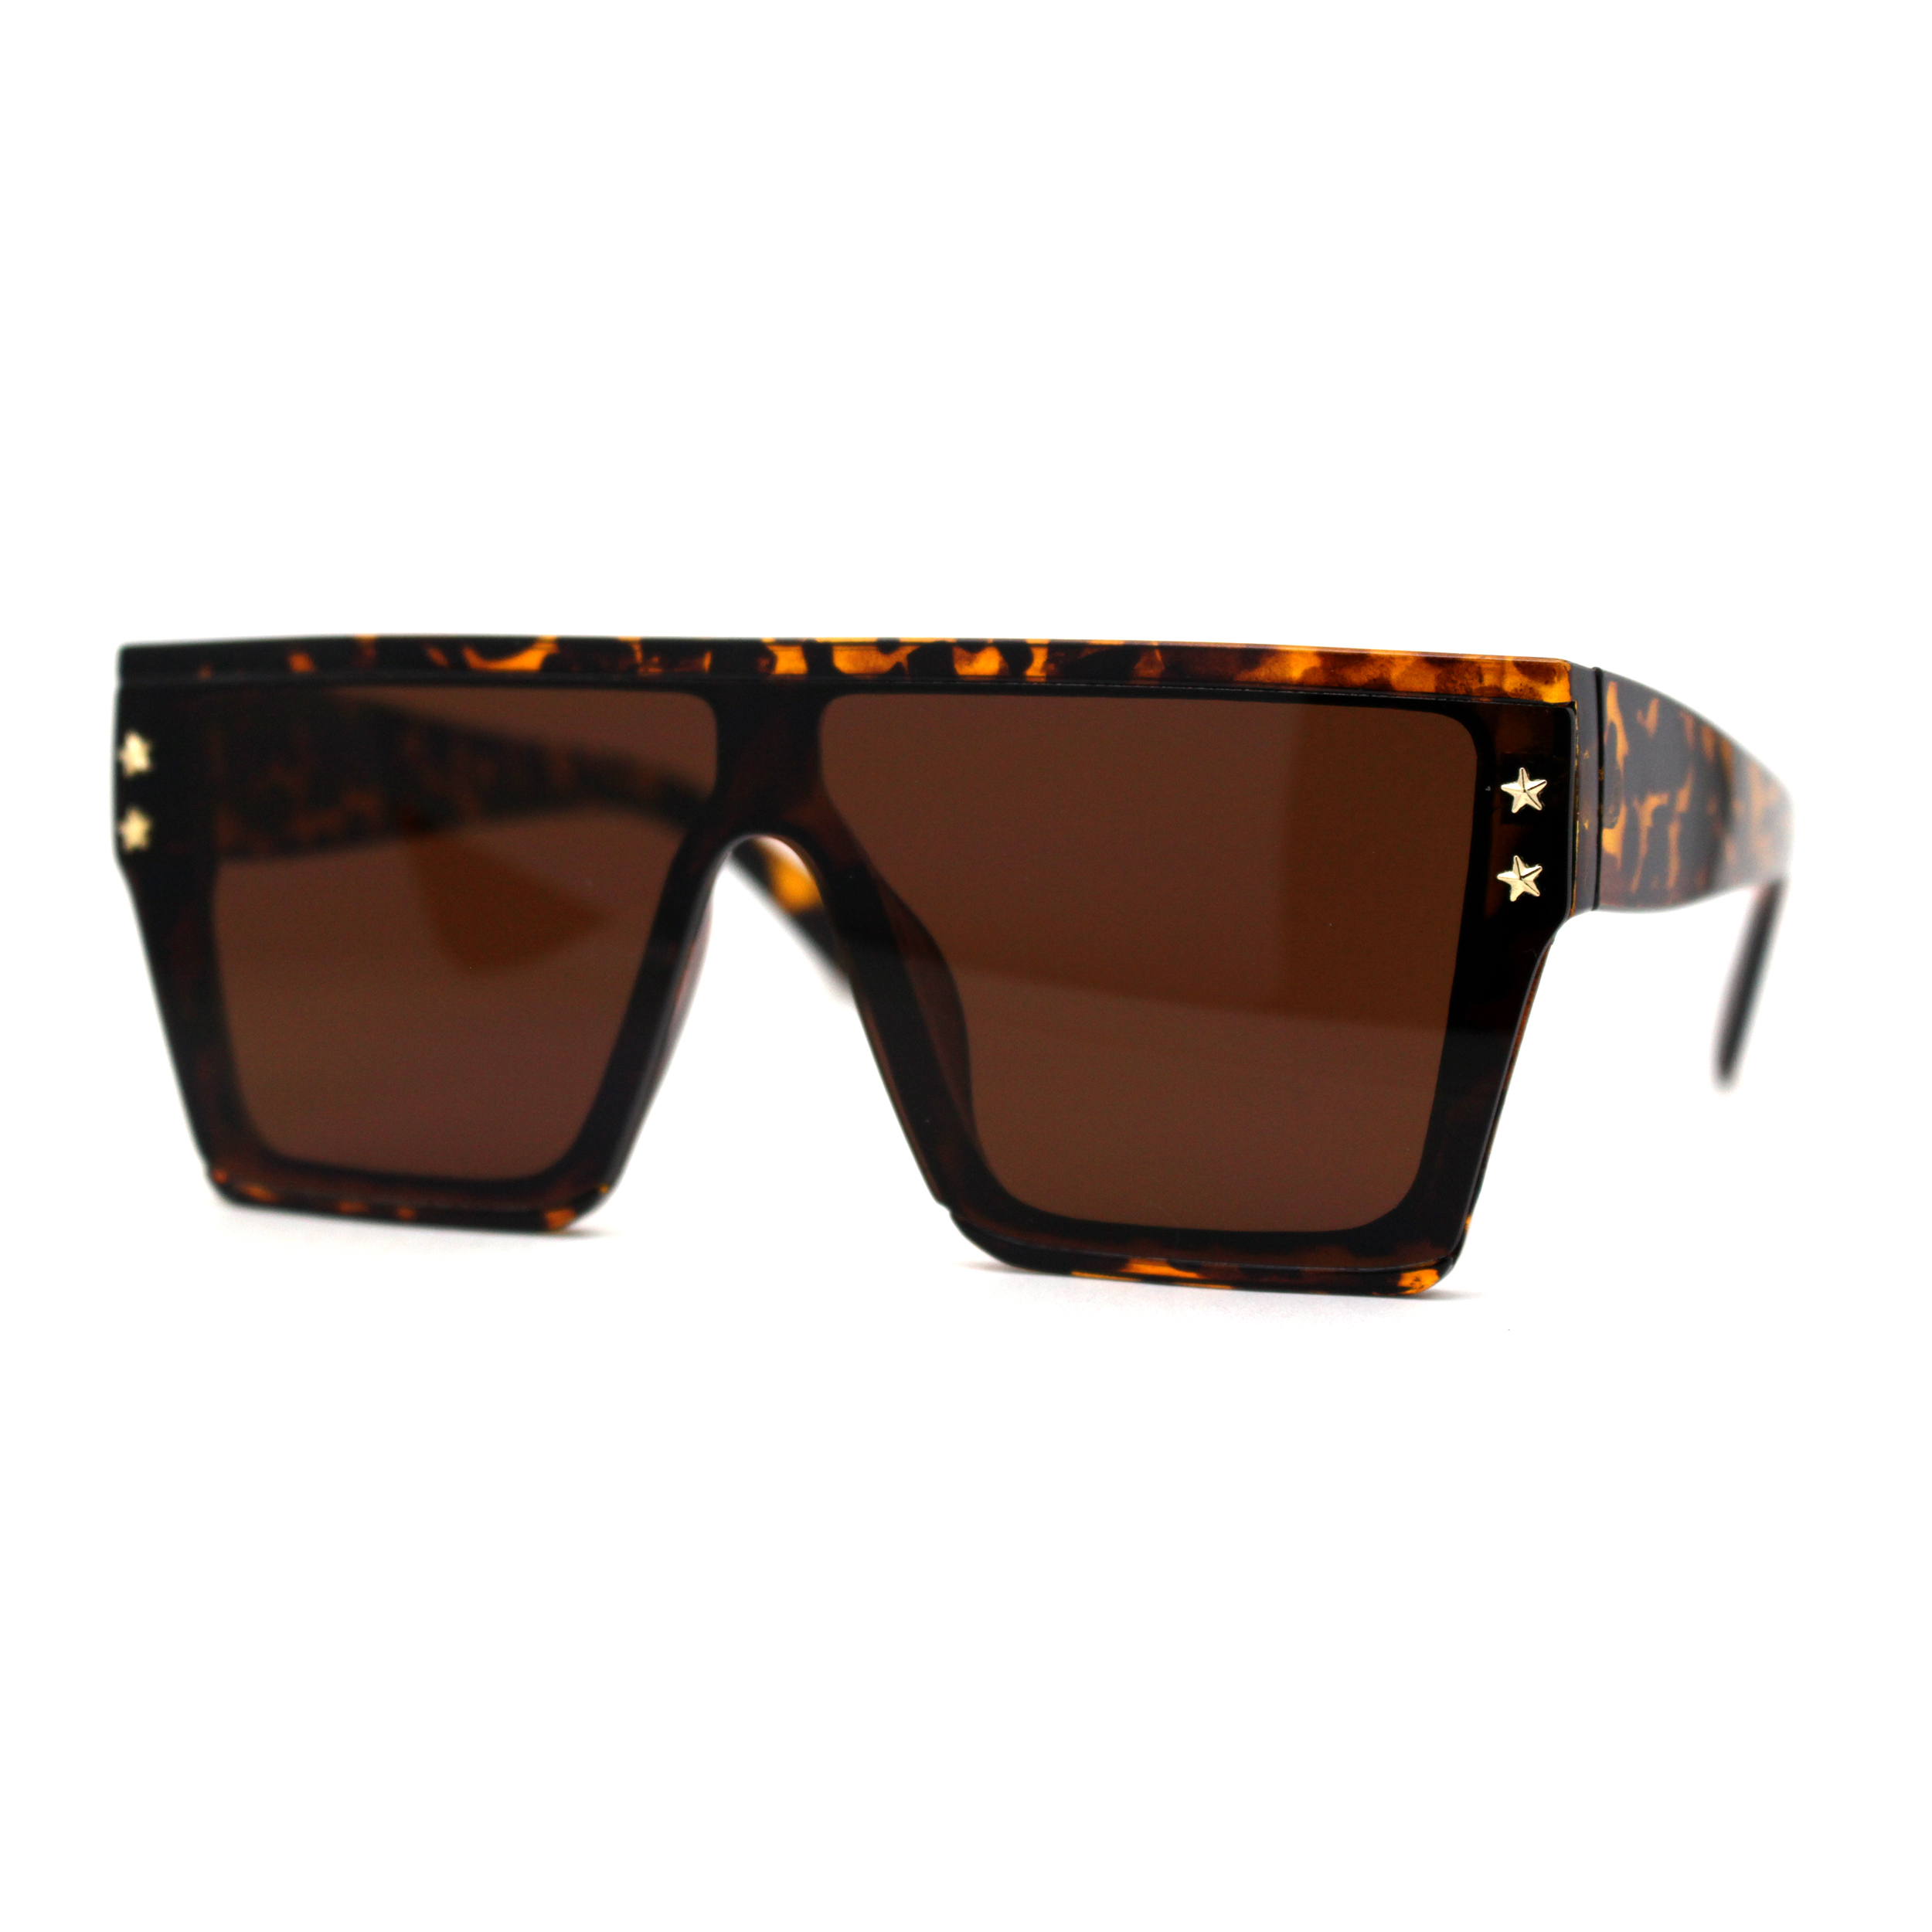 Womens Star Stud Trim Flat Top Shield Mob Plastic Sunglasses Tortoise Brown - image 2 of 4